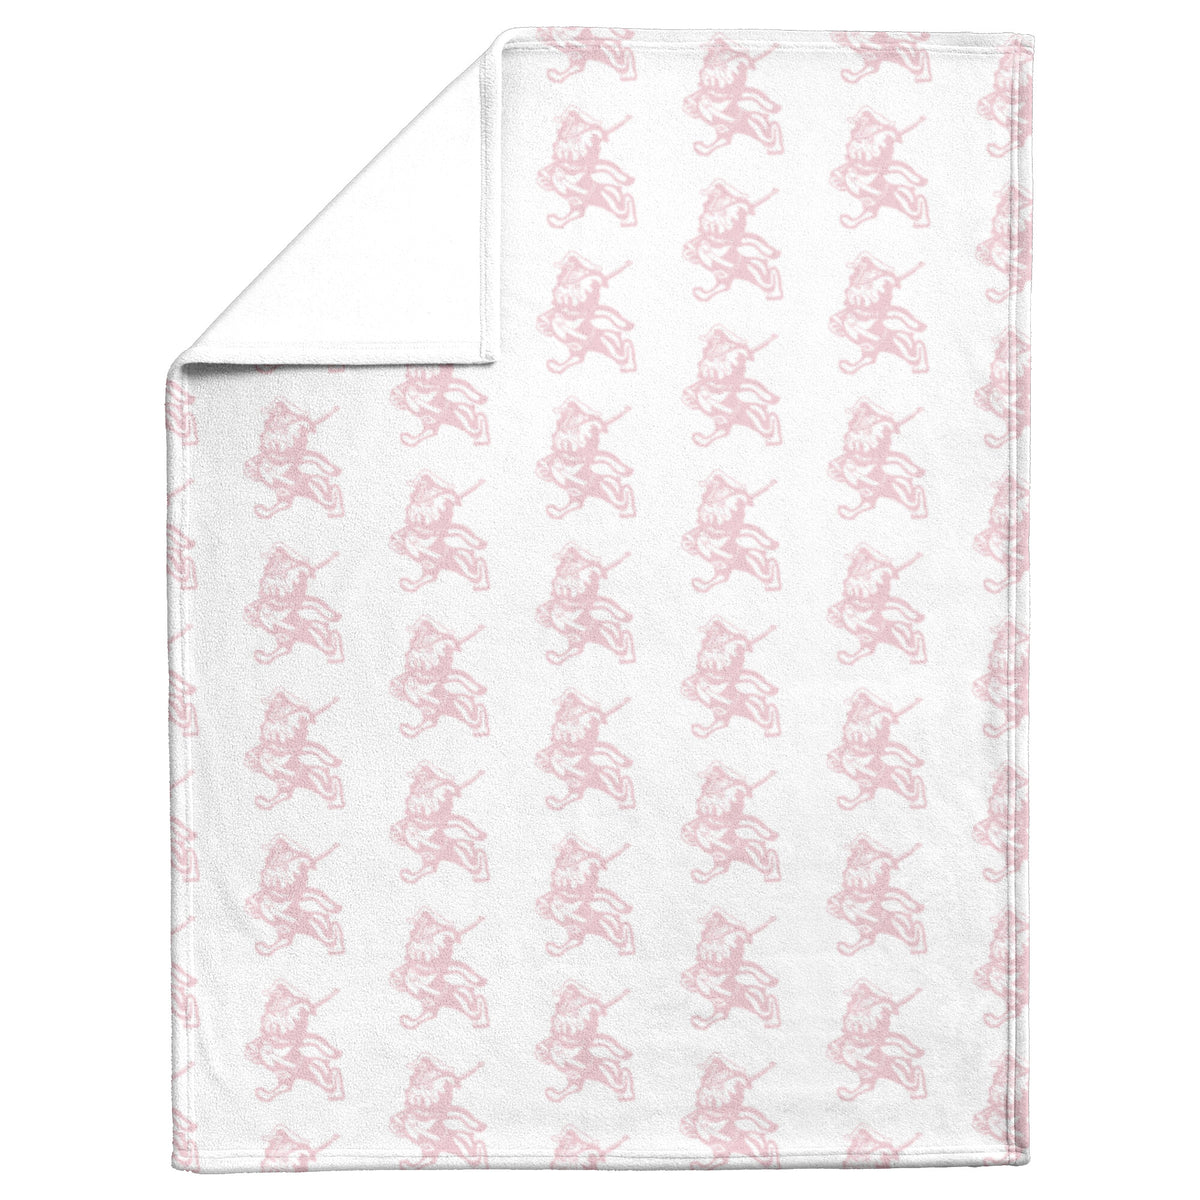 The Marching Bulldog White-Pink Blanket